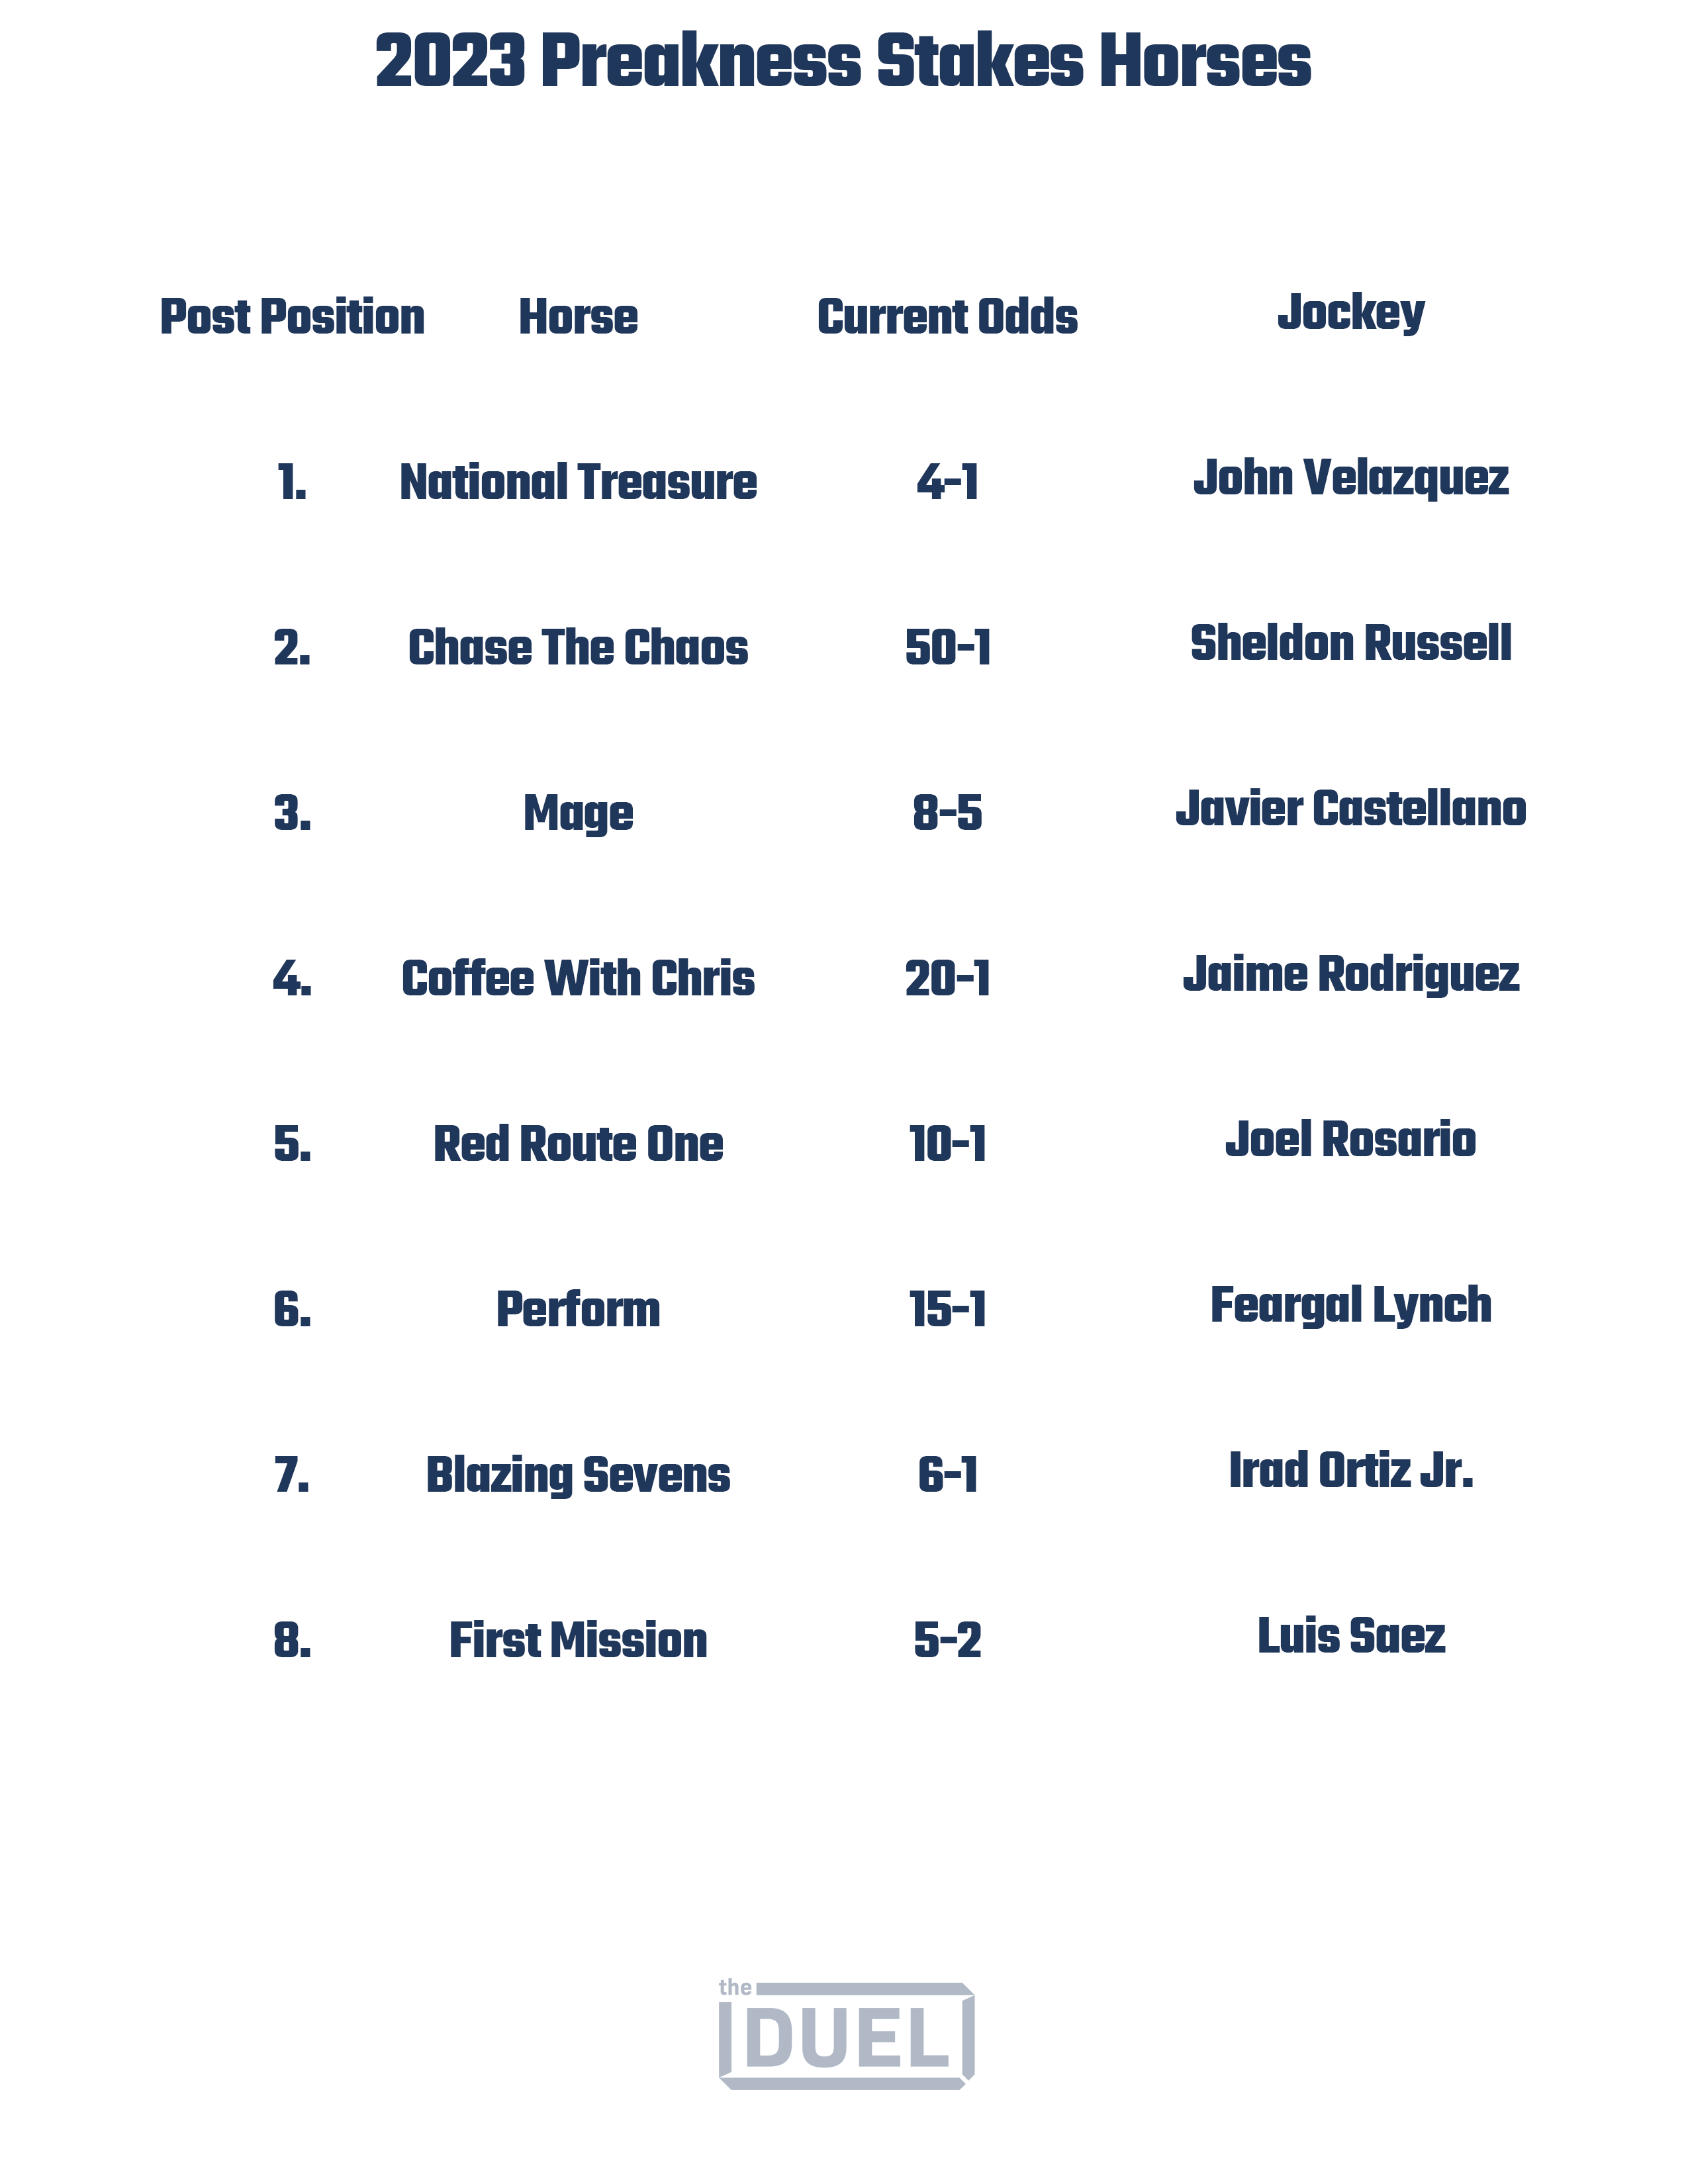 Printable List of 2023 Preakness Horses, Odds and Jockeys